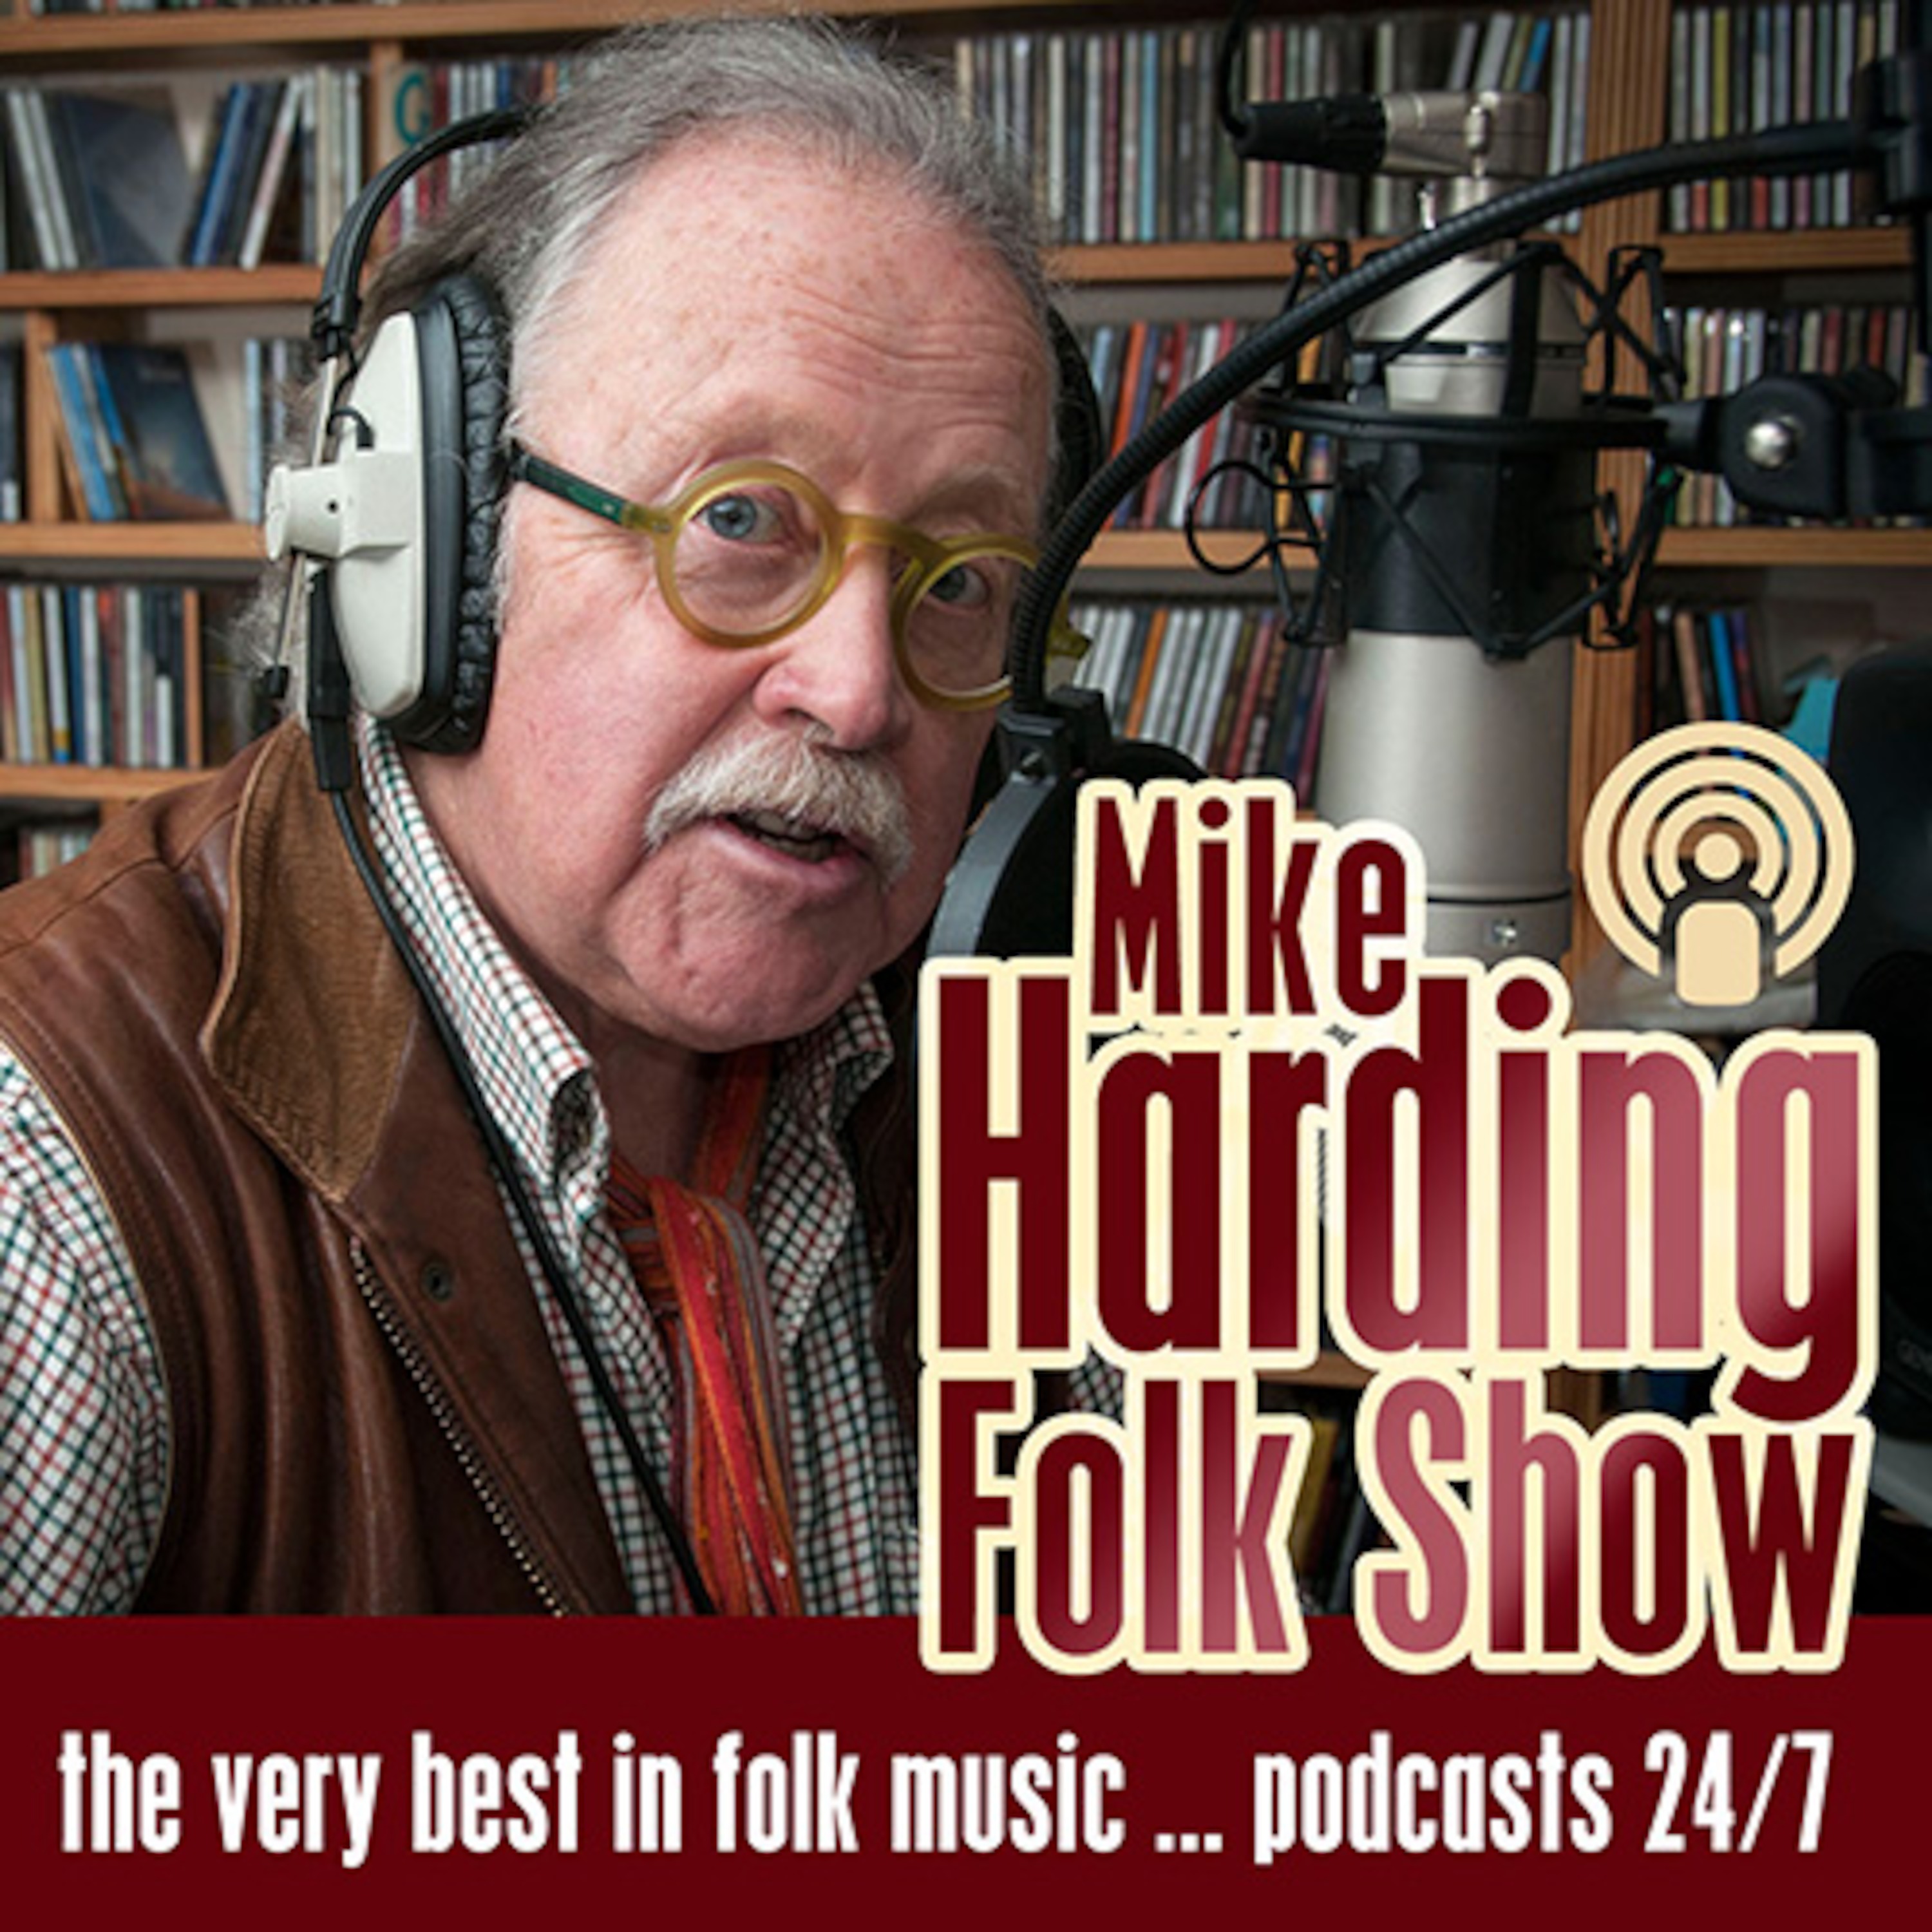 Mike Harding Folk Show 86